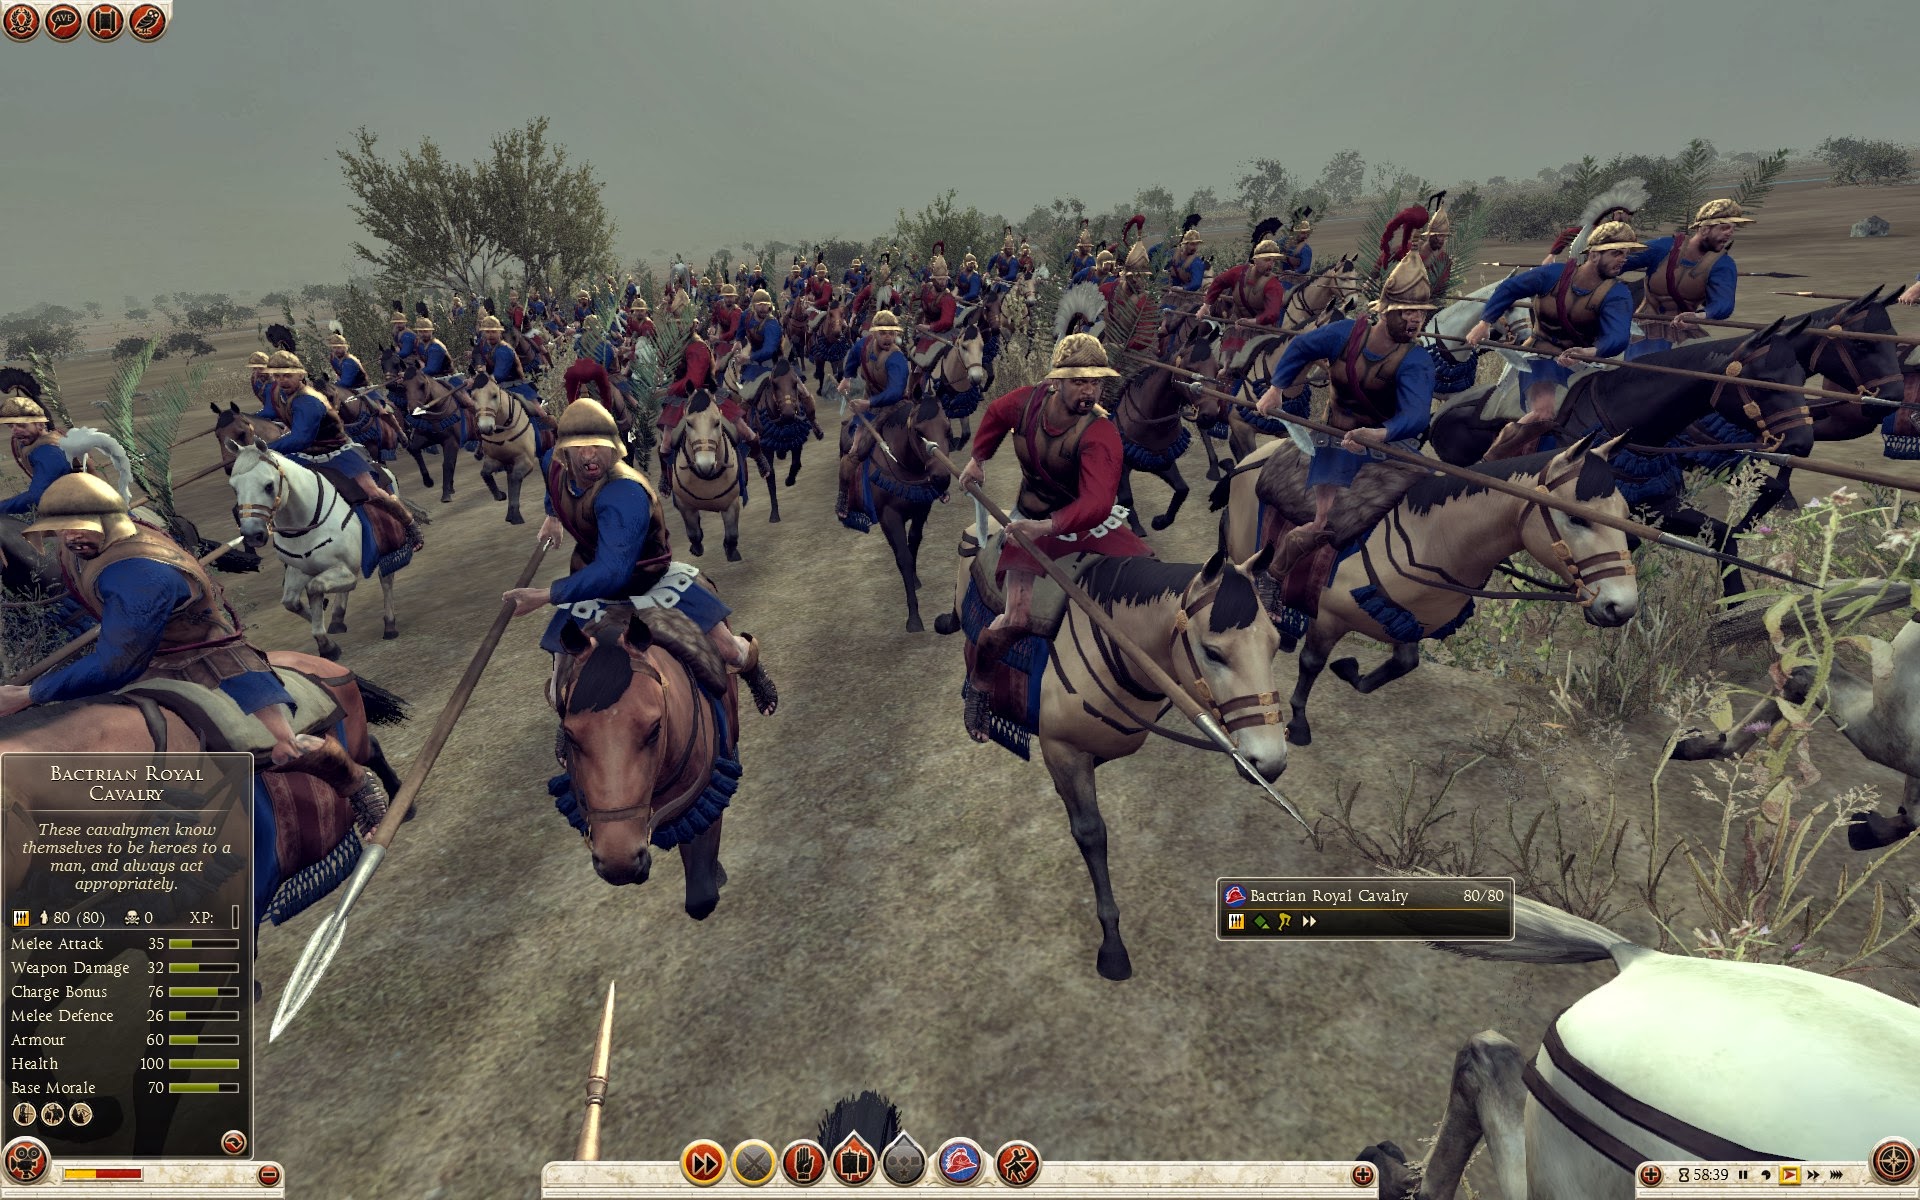 Bactrian Royal Cavalry